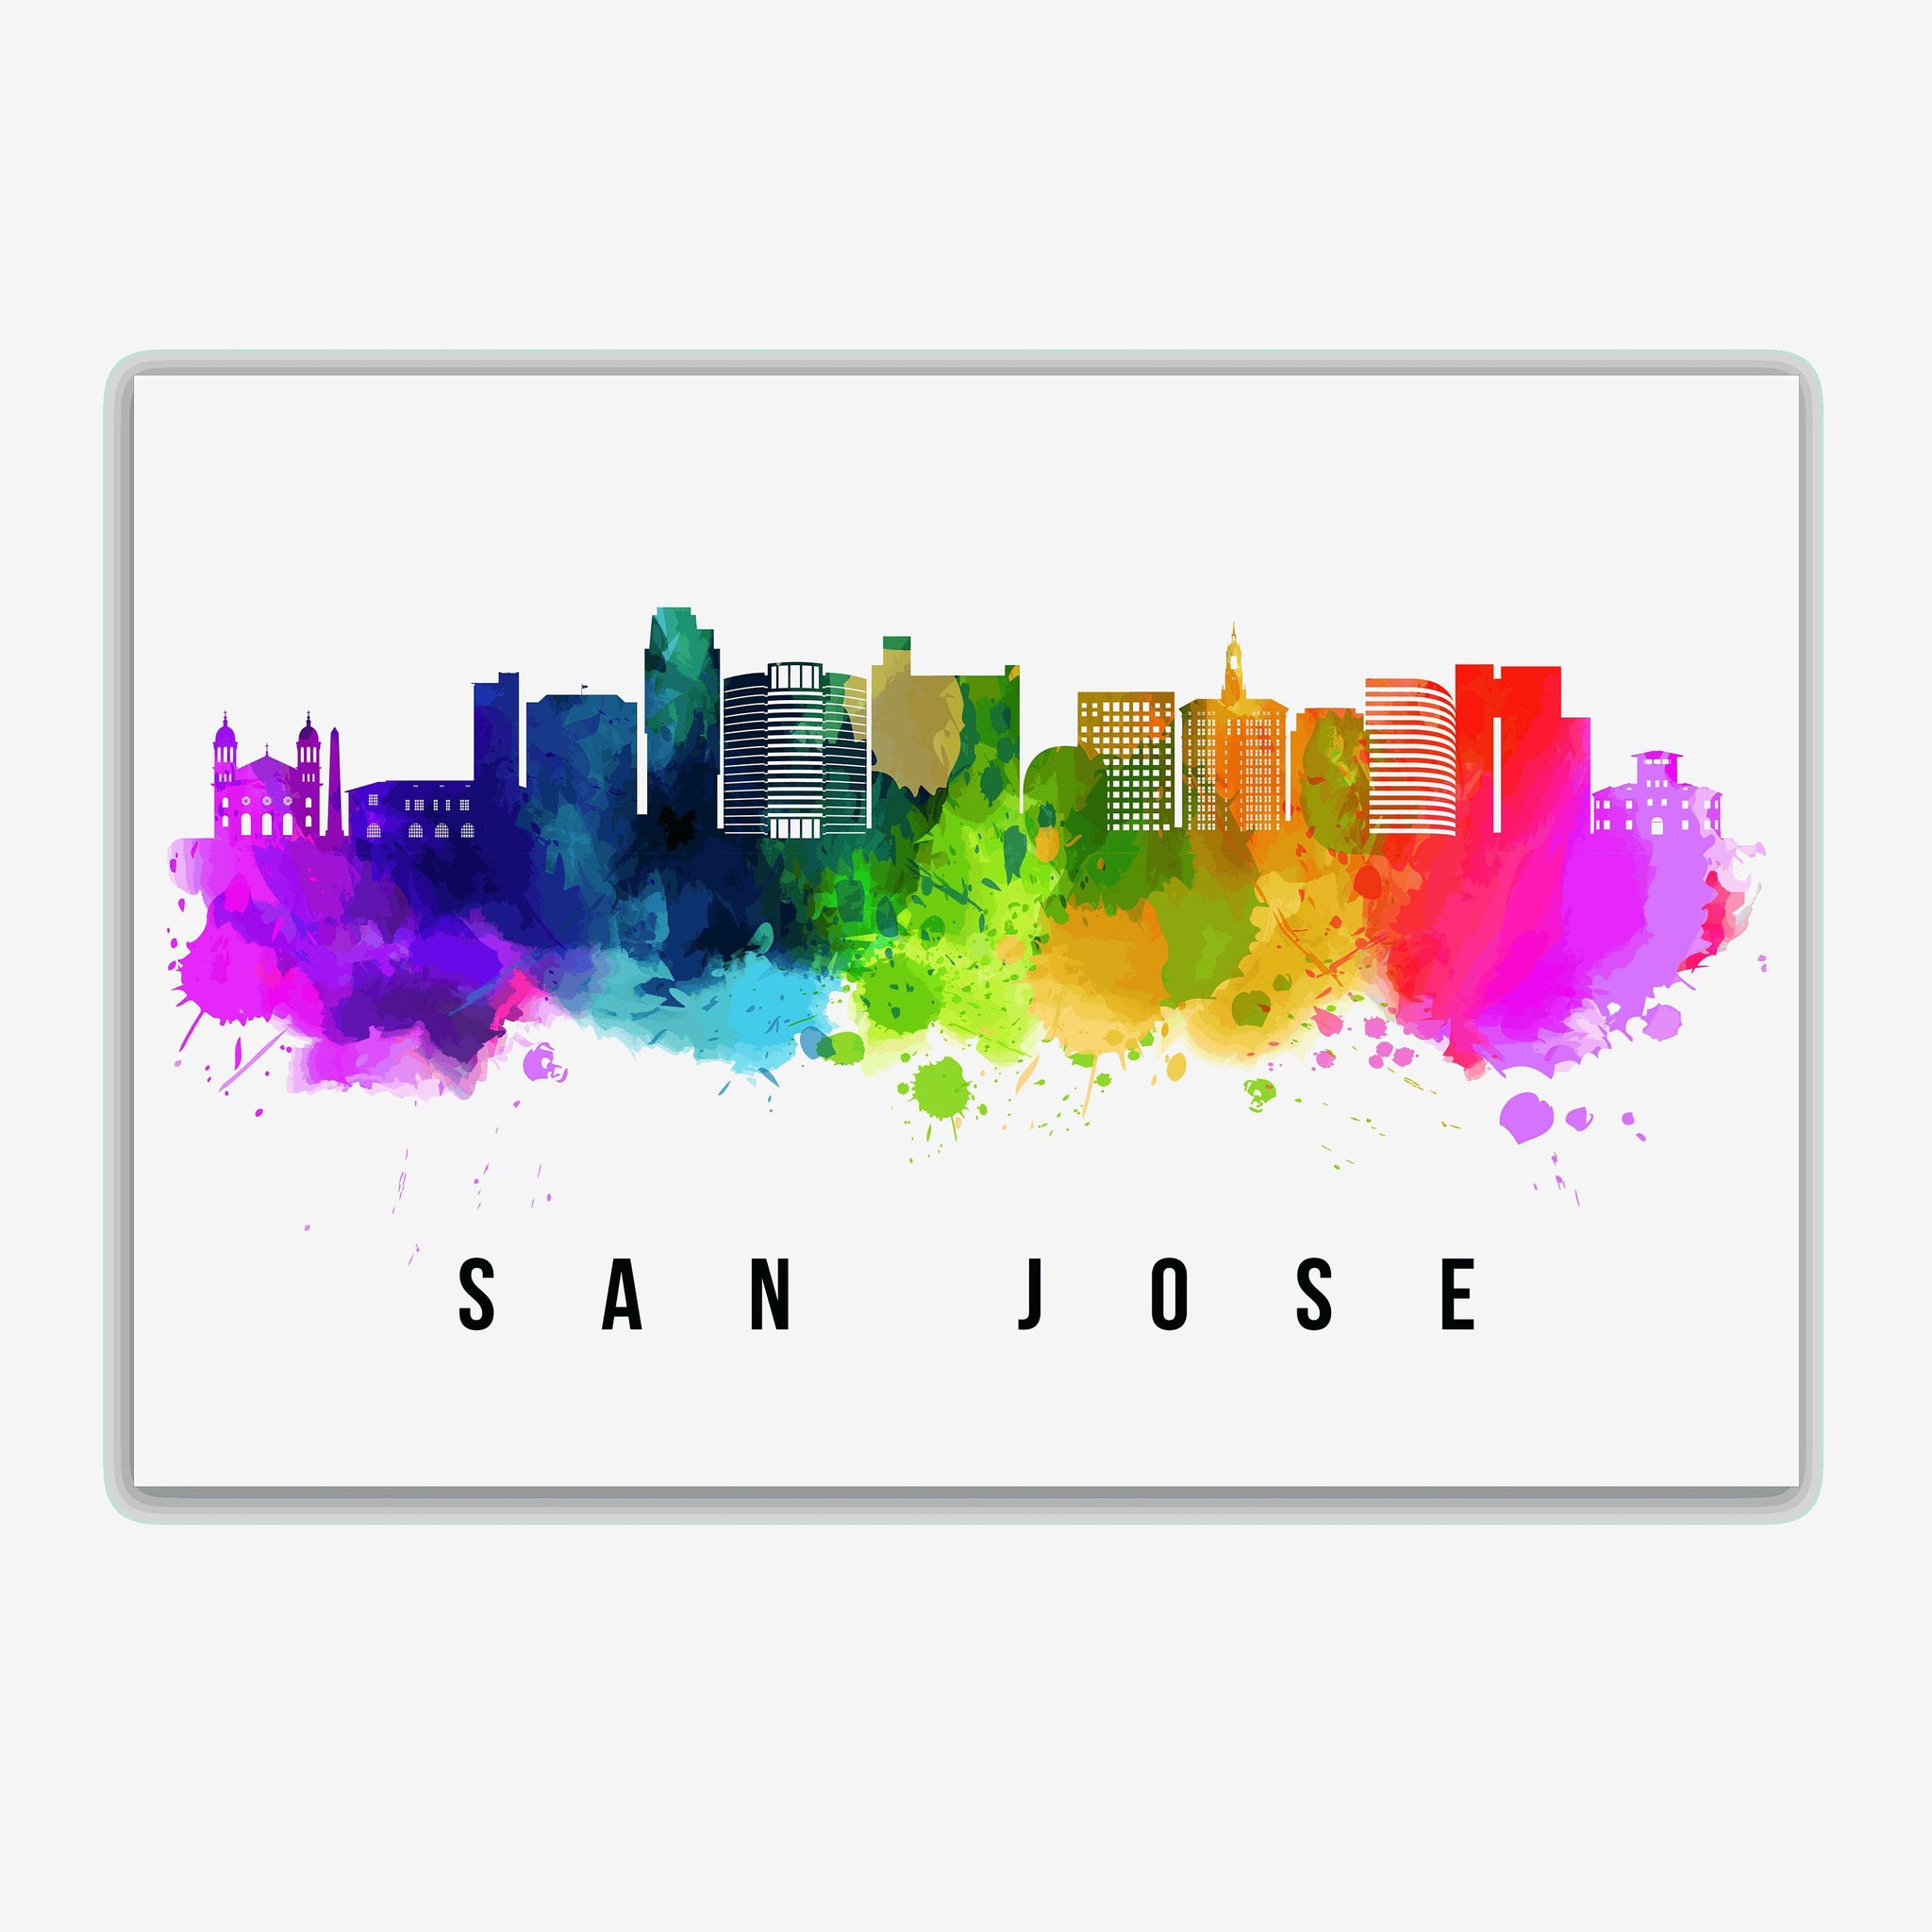 San Jose Skyline California Poster, California Cityscape Painting, San jose California Poster, Cityscape and Landmark Print, Home Wall Art